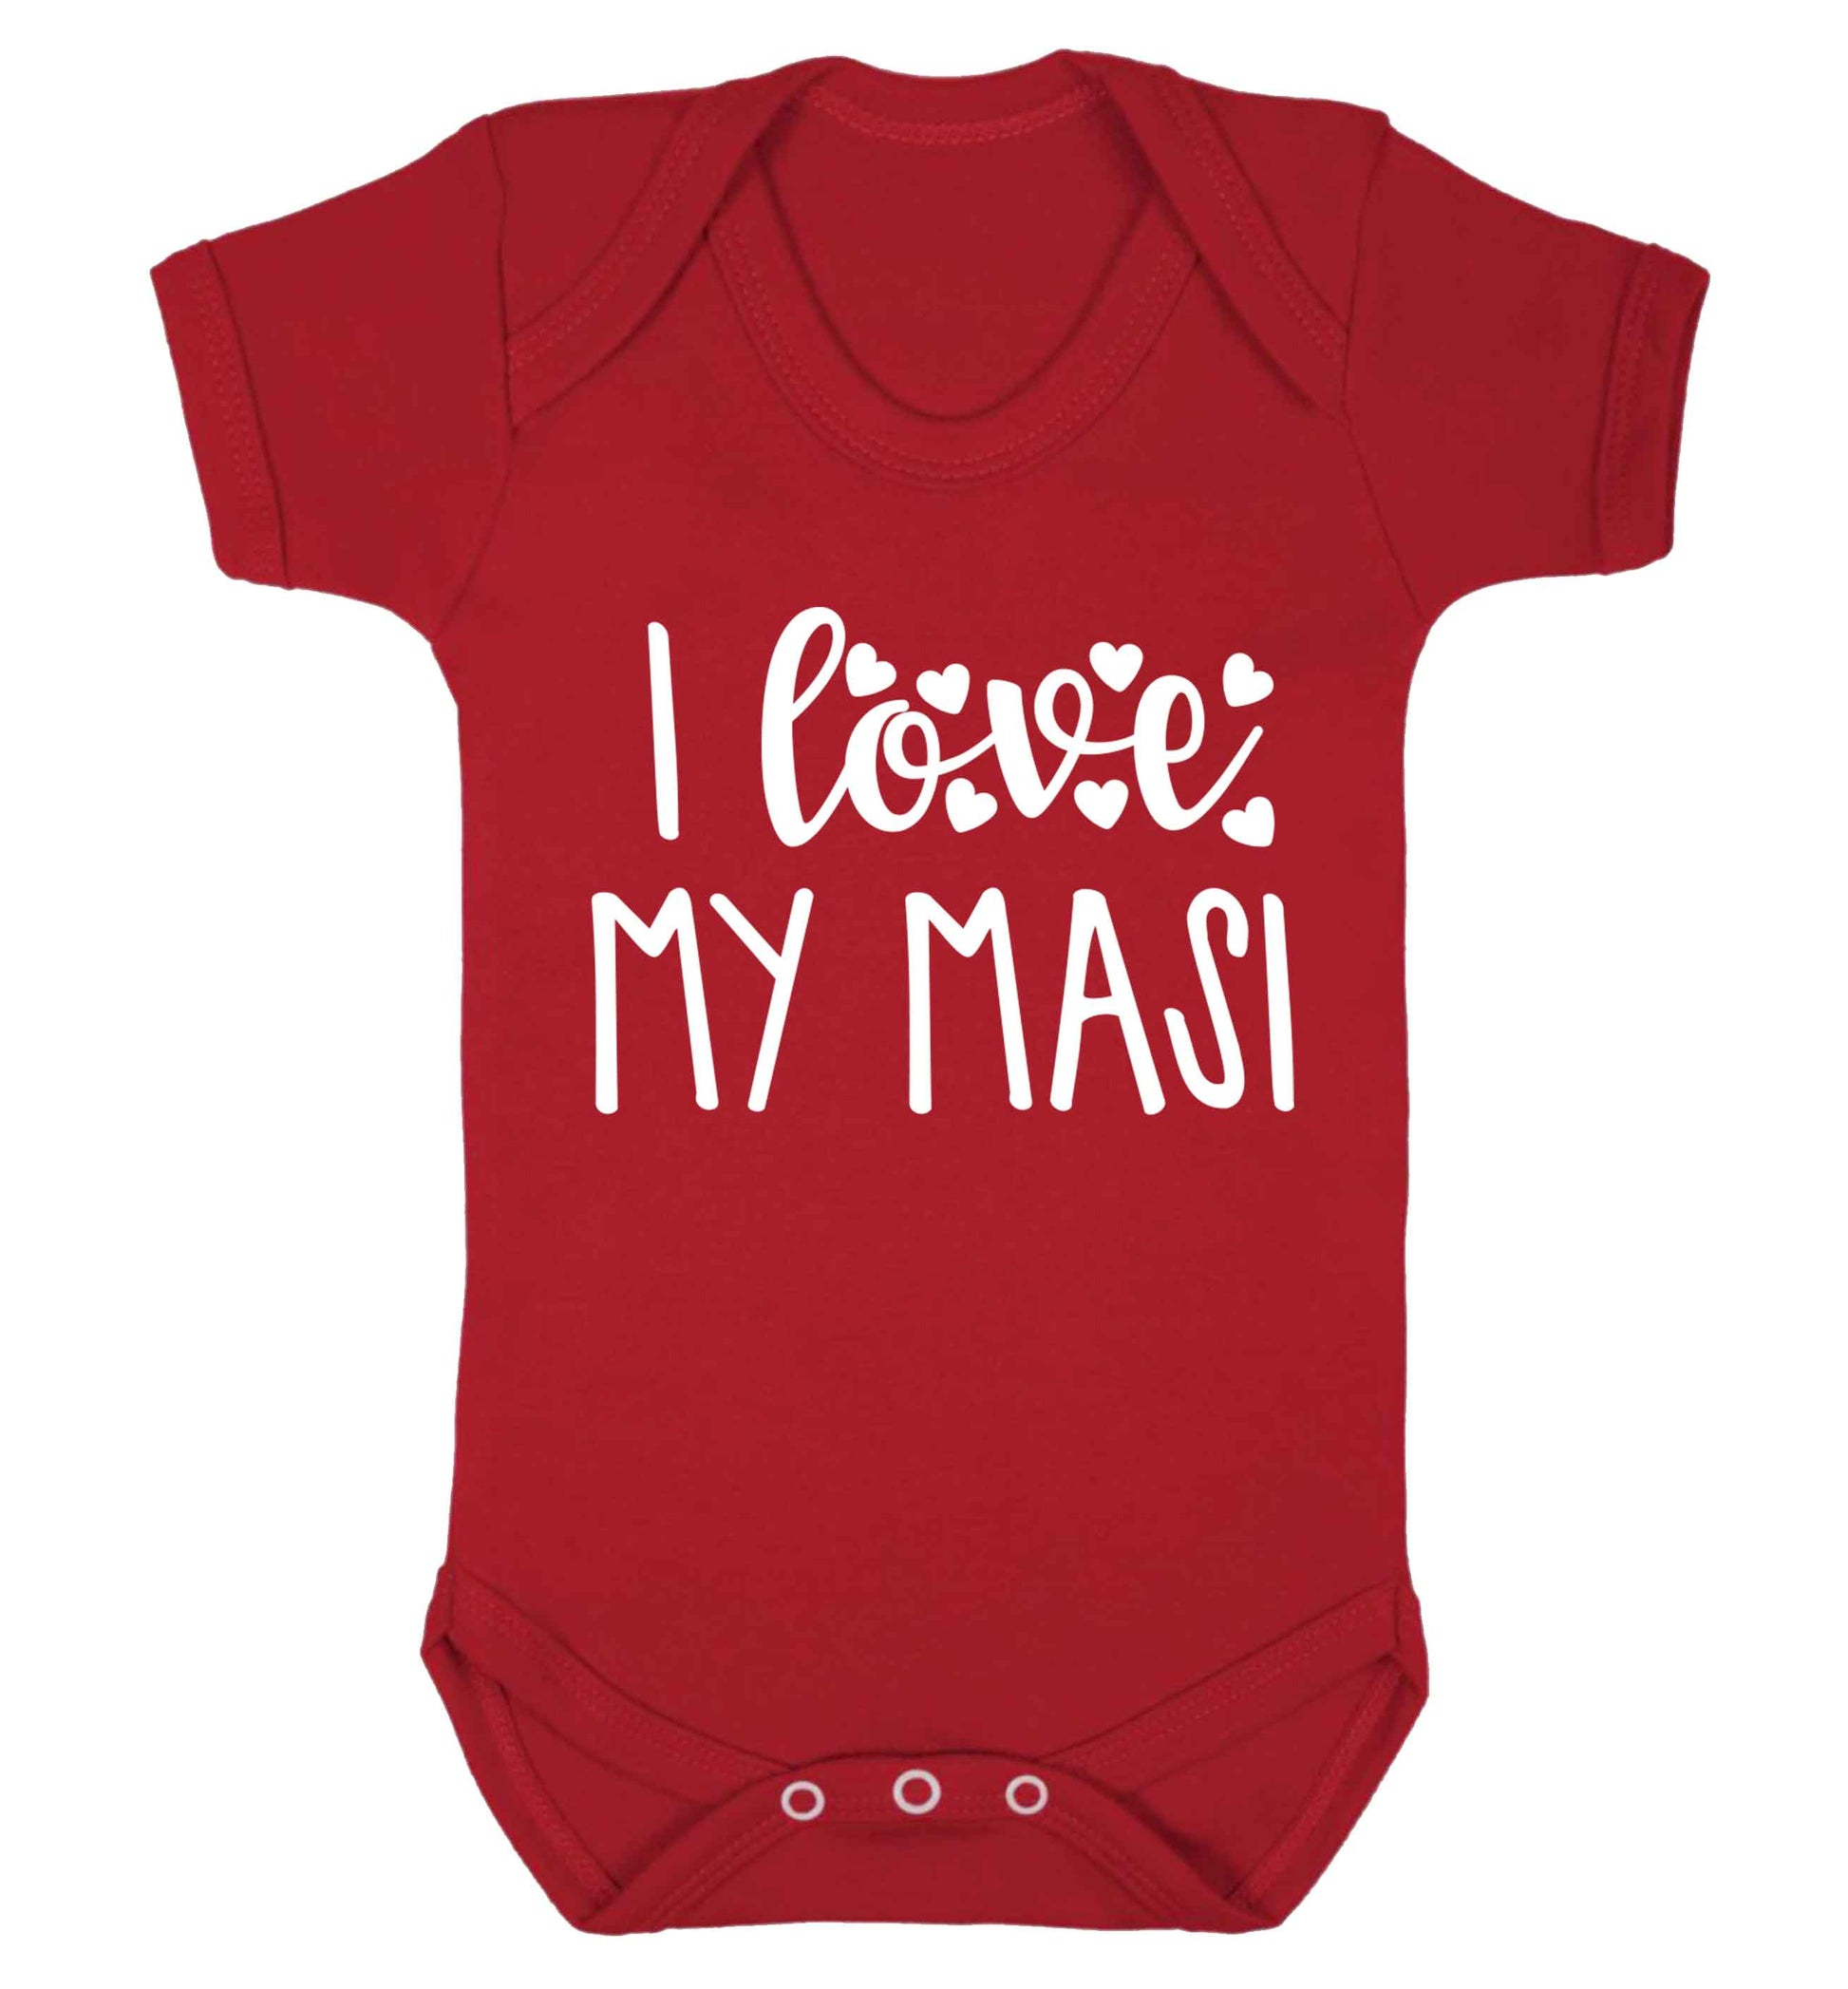 I love my masi Baby Vest red 18-24 months